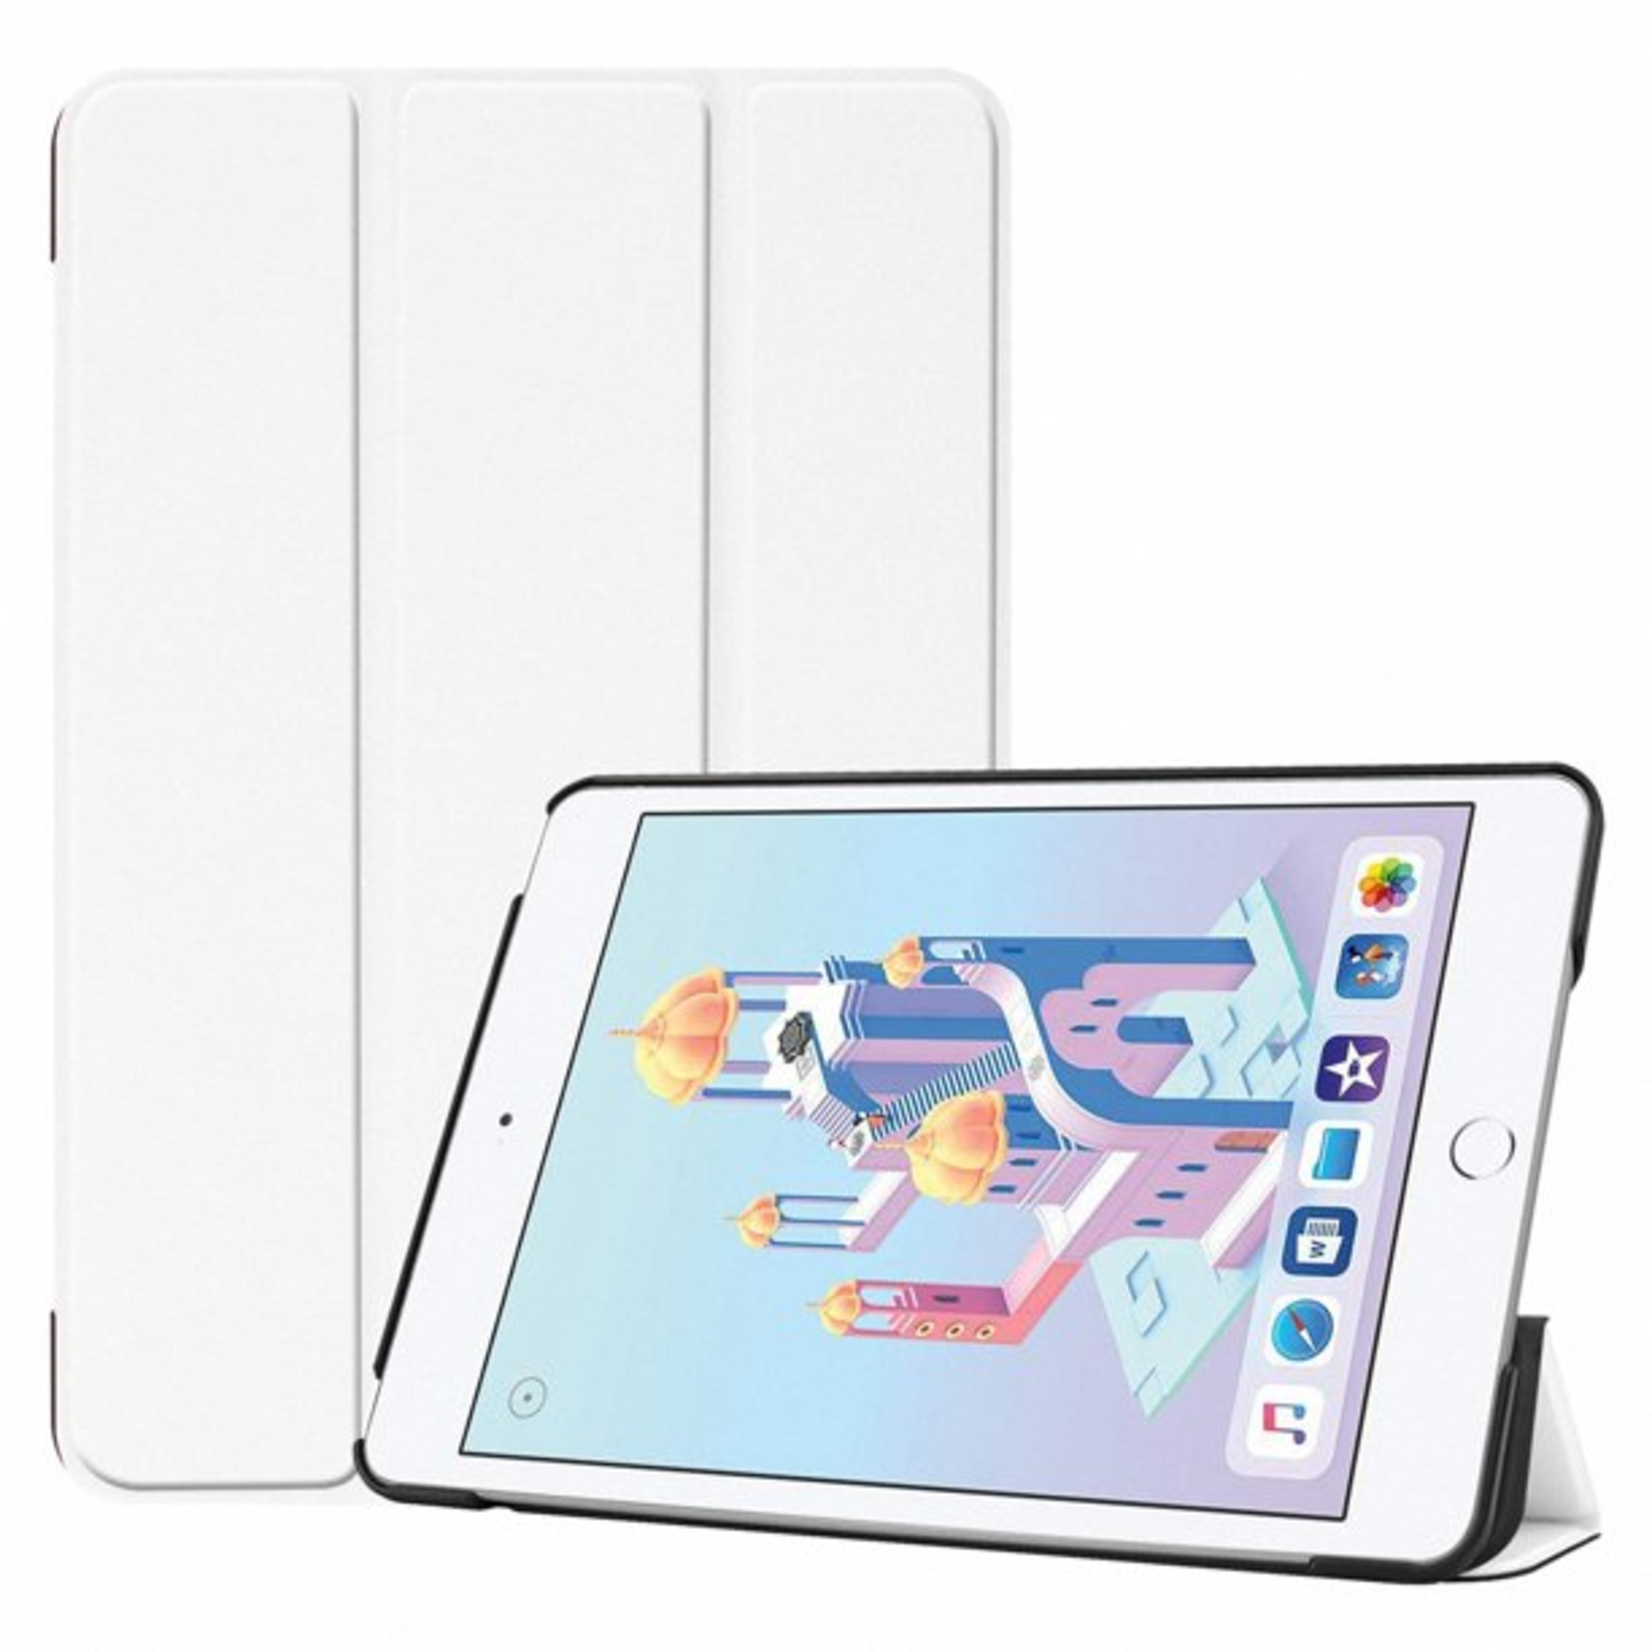 Apple iPad mini Smart Cover - White (5th Generation)